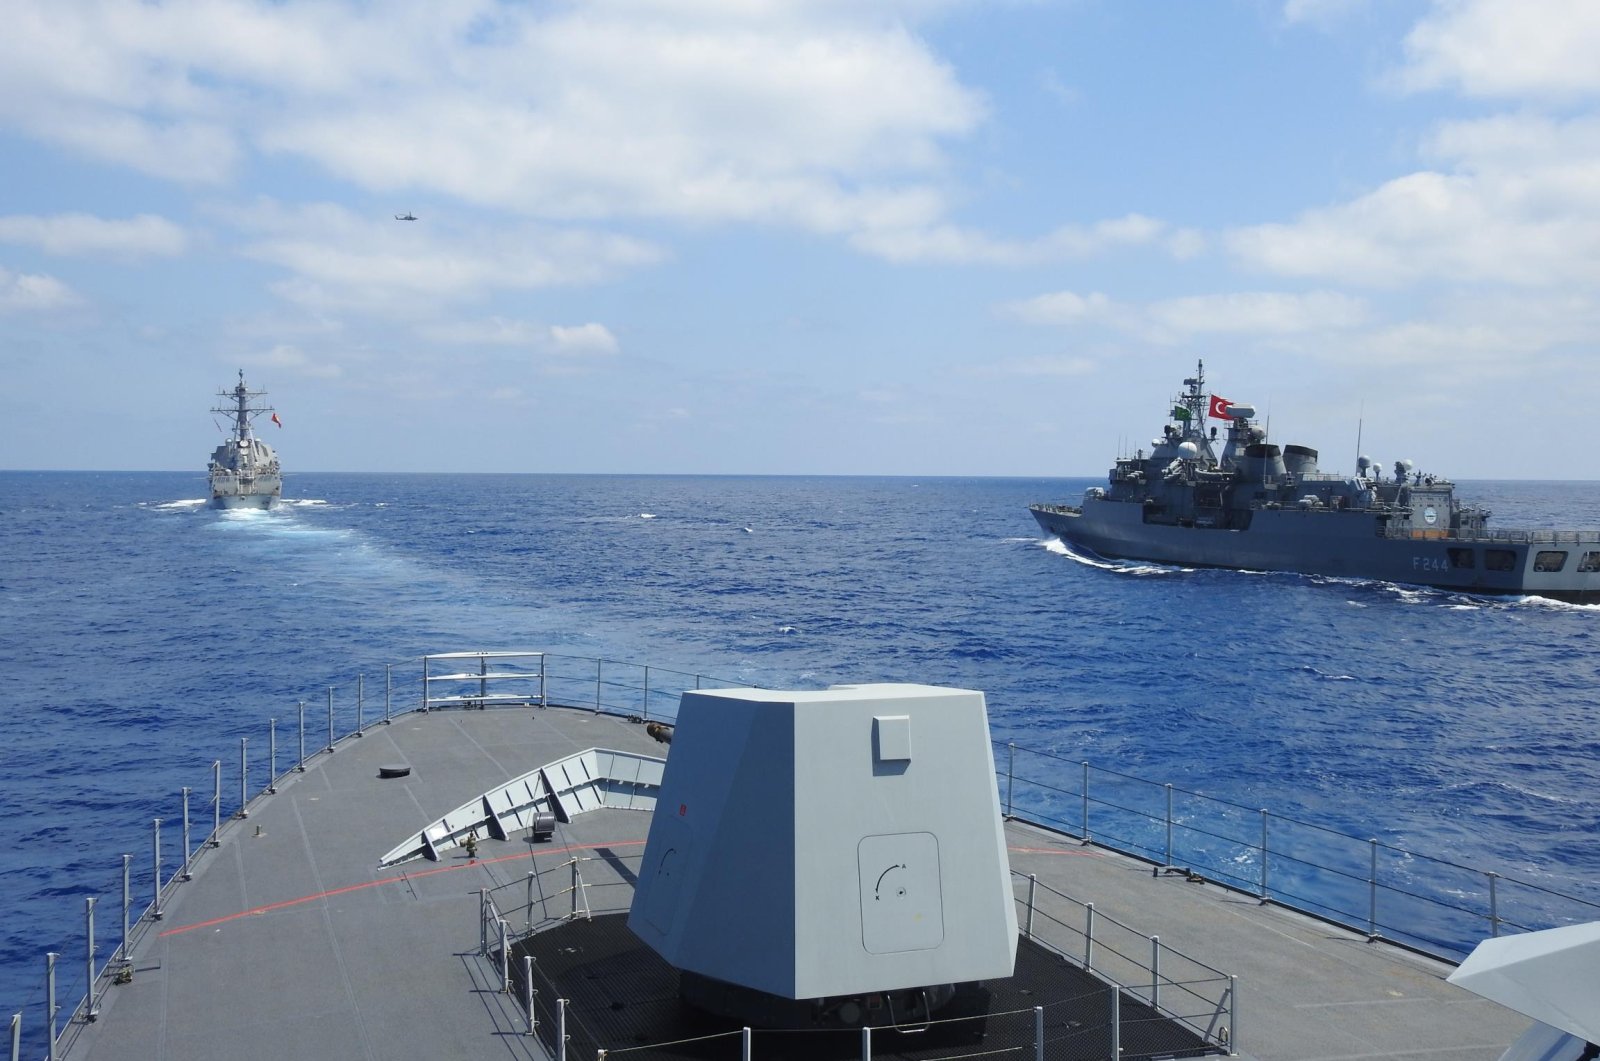 TCG Barbaros frigate, TCG Burgazada corvette and USS Winston S. Churchill conduct naval training exercises in the Eastern Mediterranean on Aug. 26, 2020 (AA Photo)